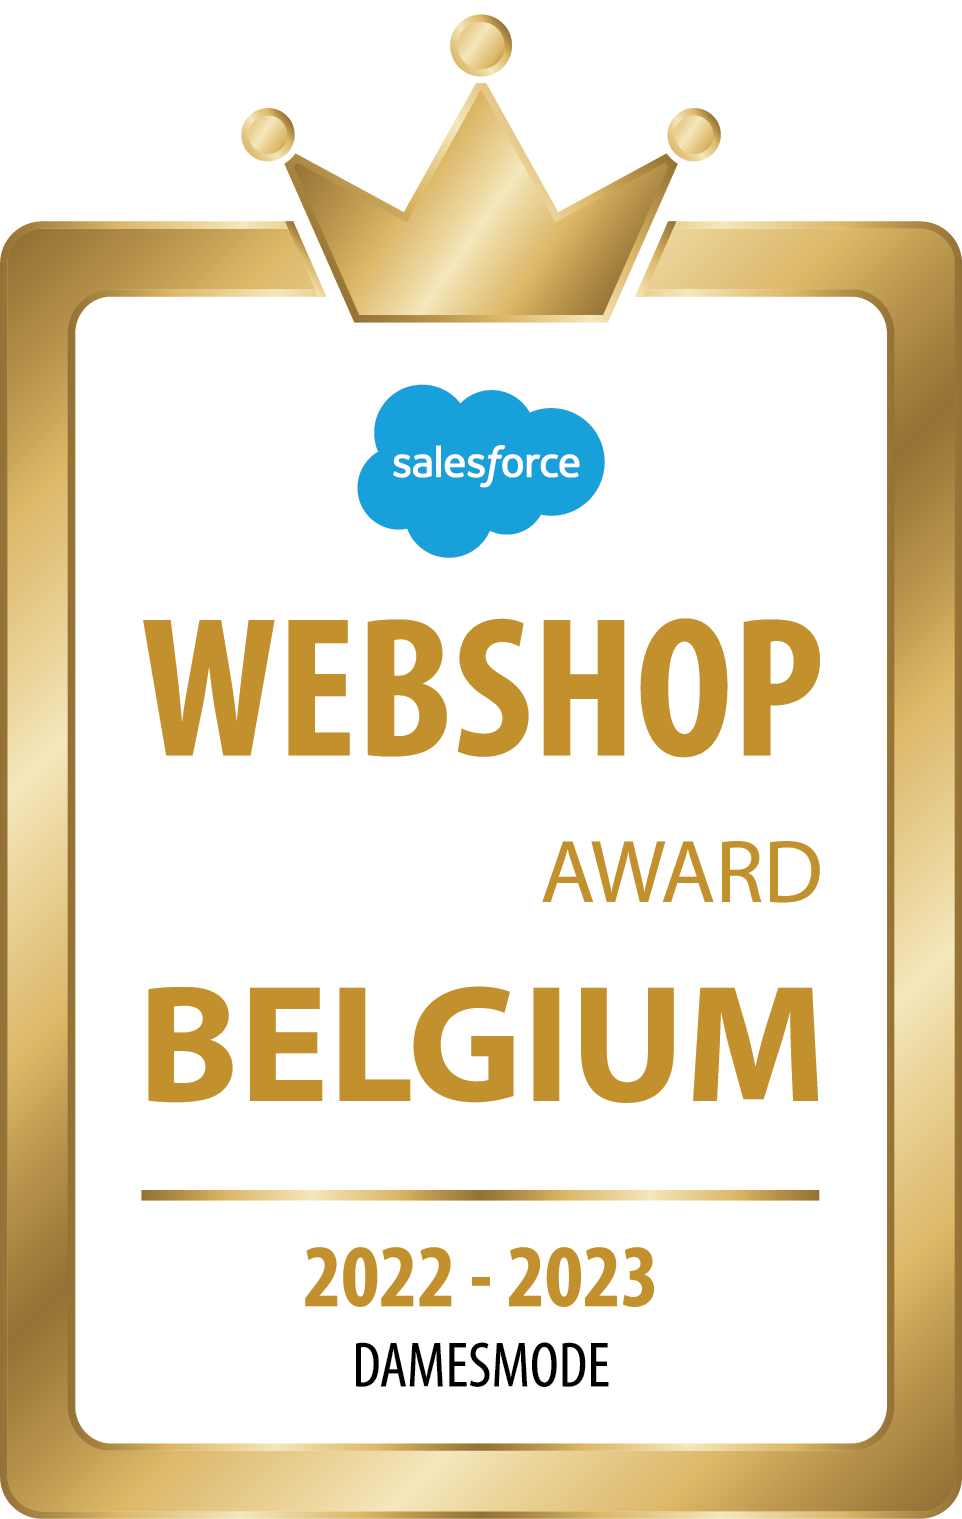 Damesmode webshop of the year award logo